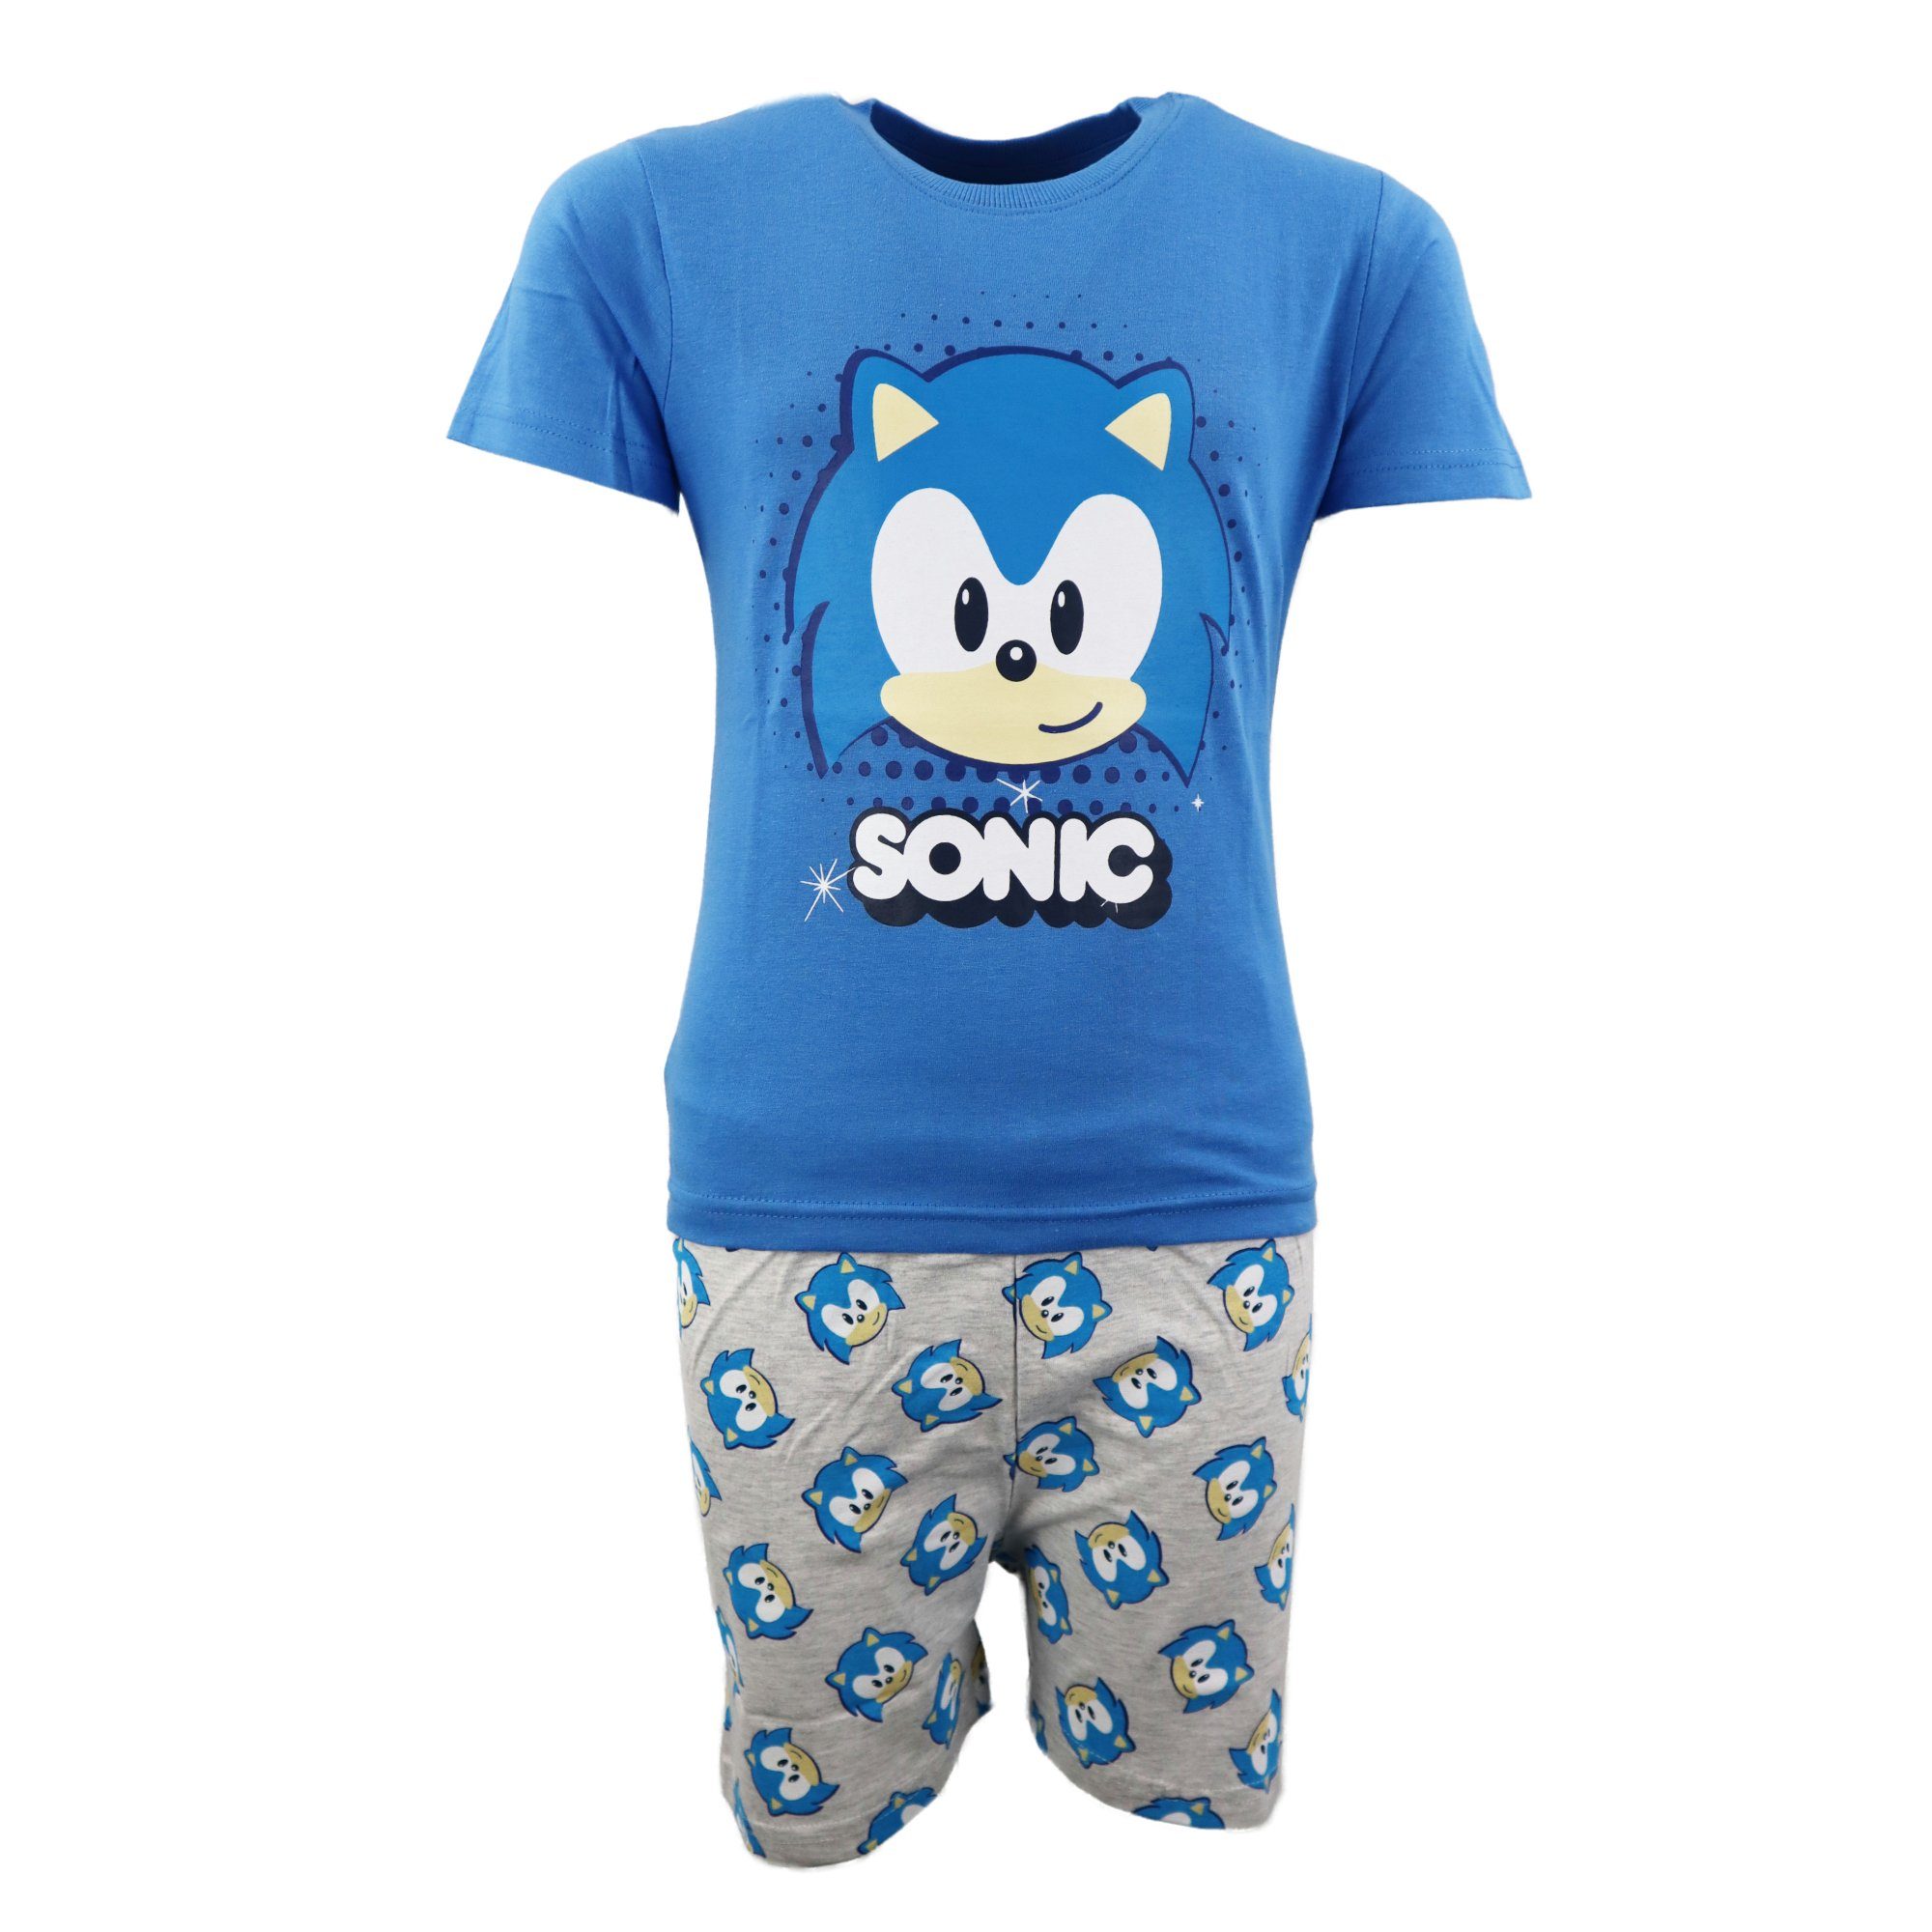 Sonic SEGA Schlafanzug Sonic the Hedgehog Jungen Kinder Pyjama Gr. 98 bis 128 Blau/Grau